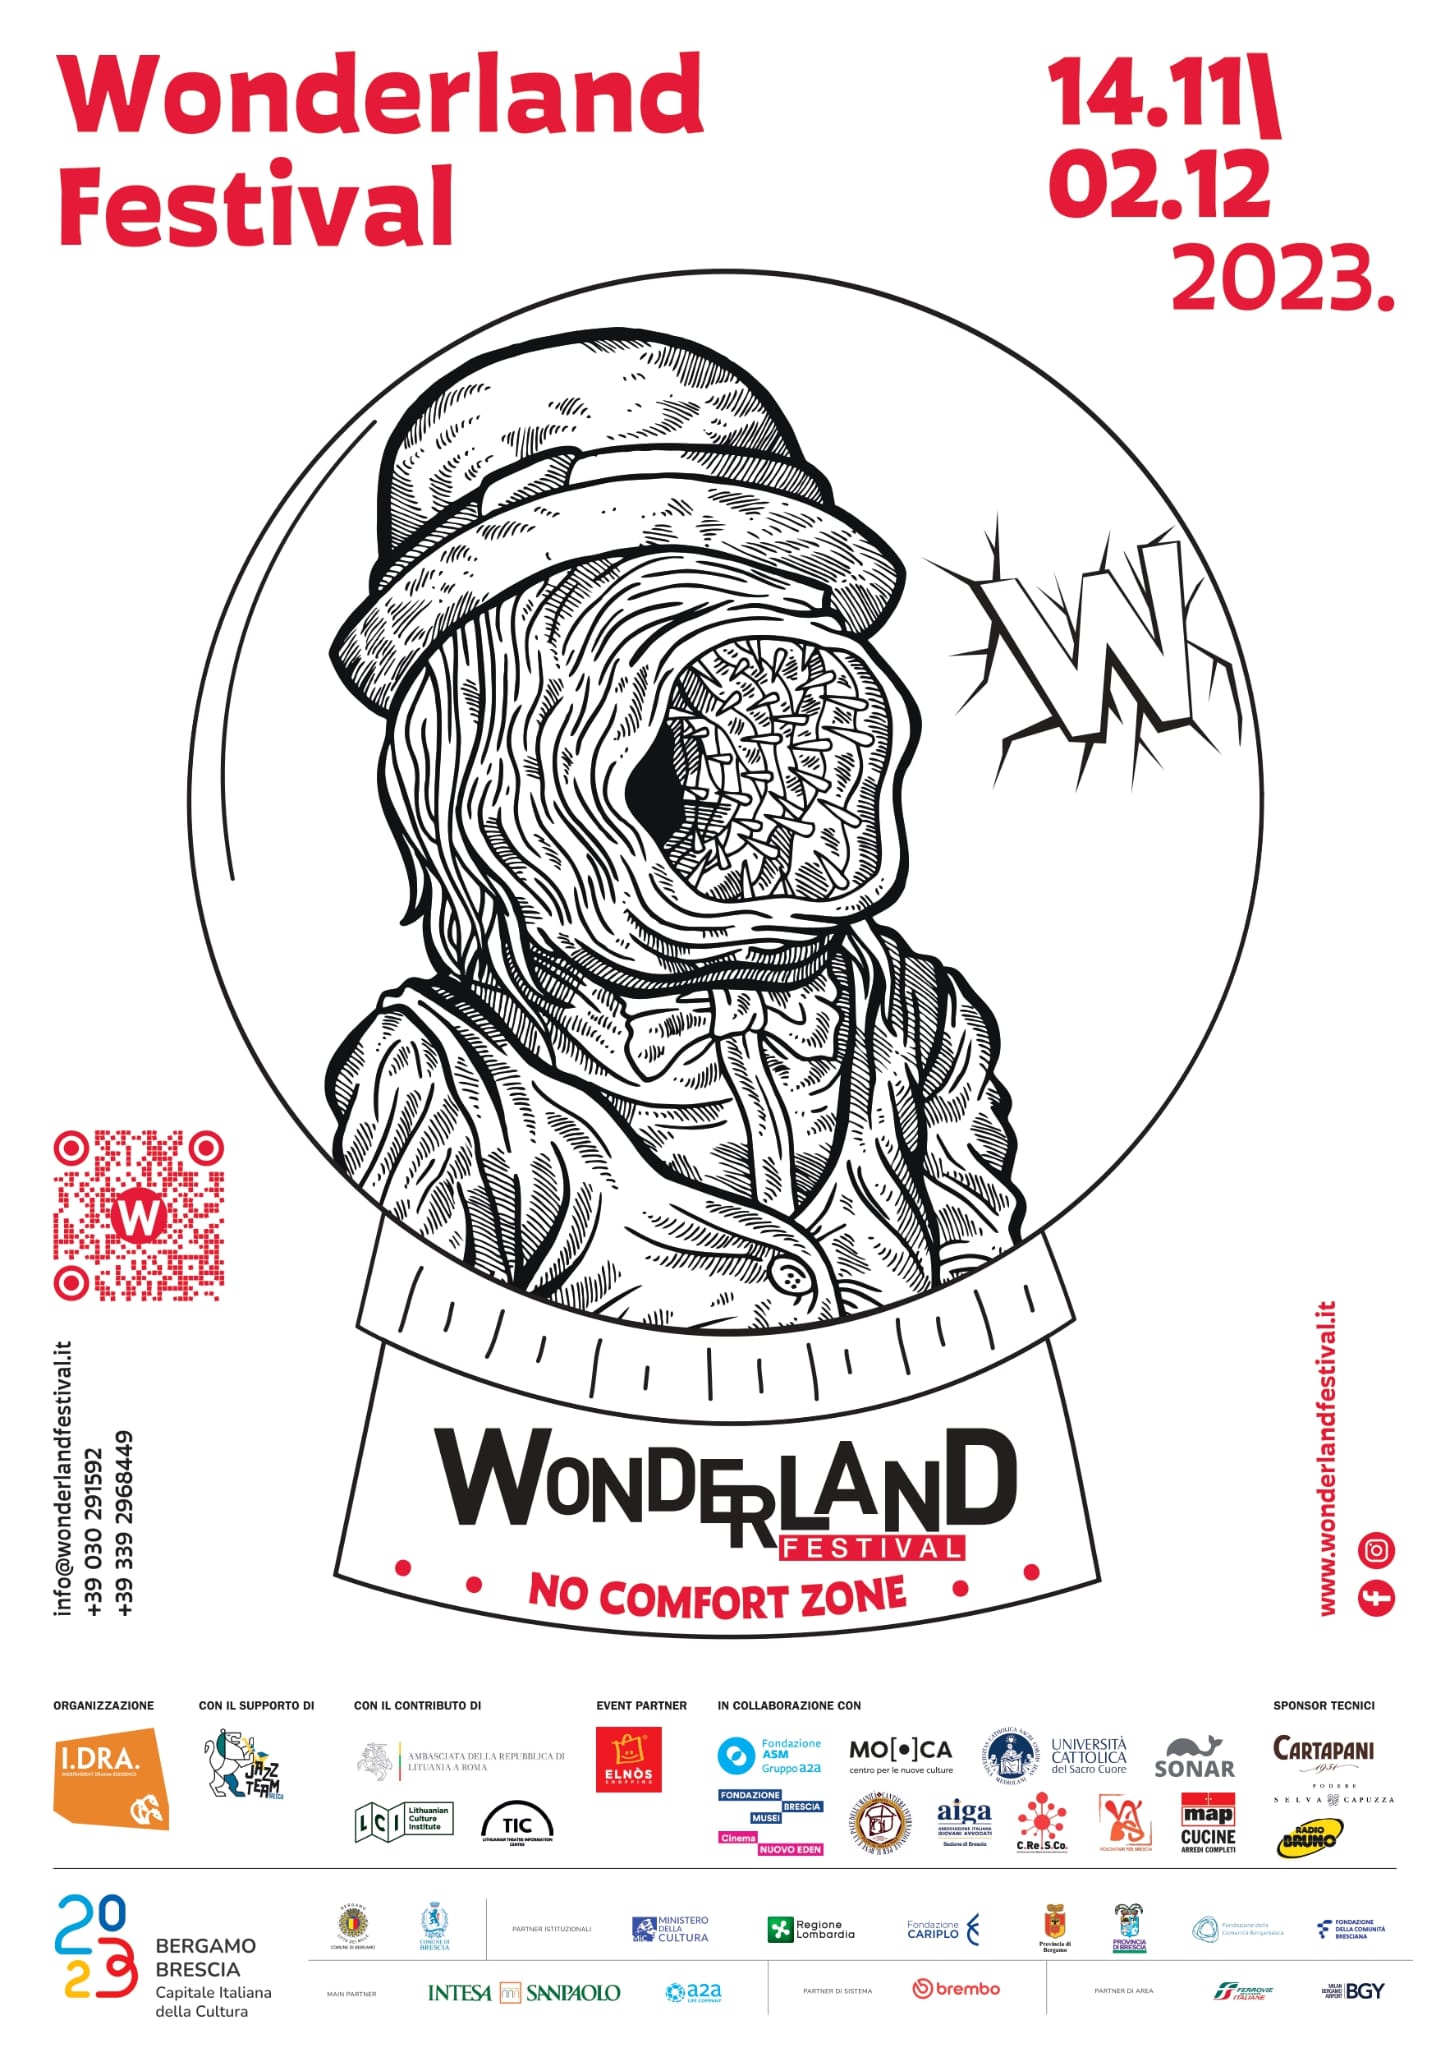 Wonderland Festival, una “no comfort zone” dedicata all’ingiustizia